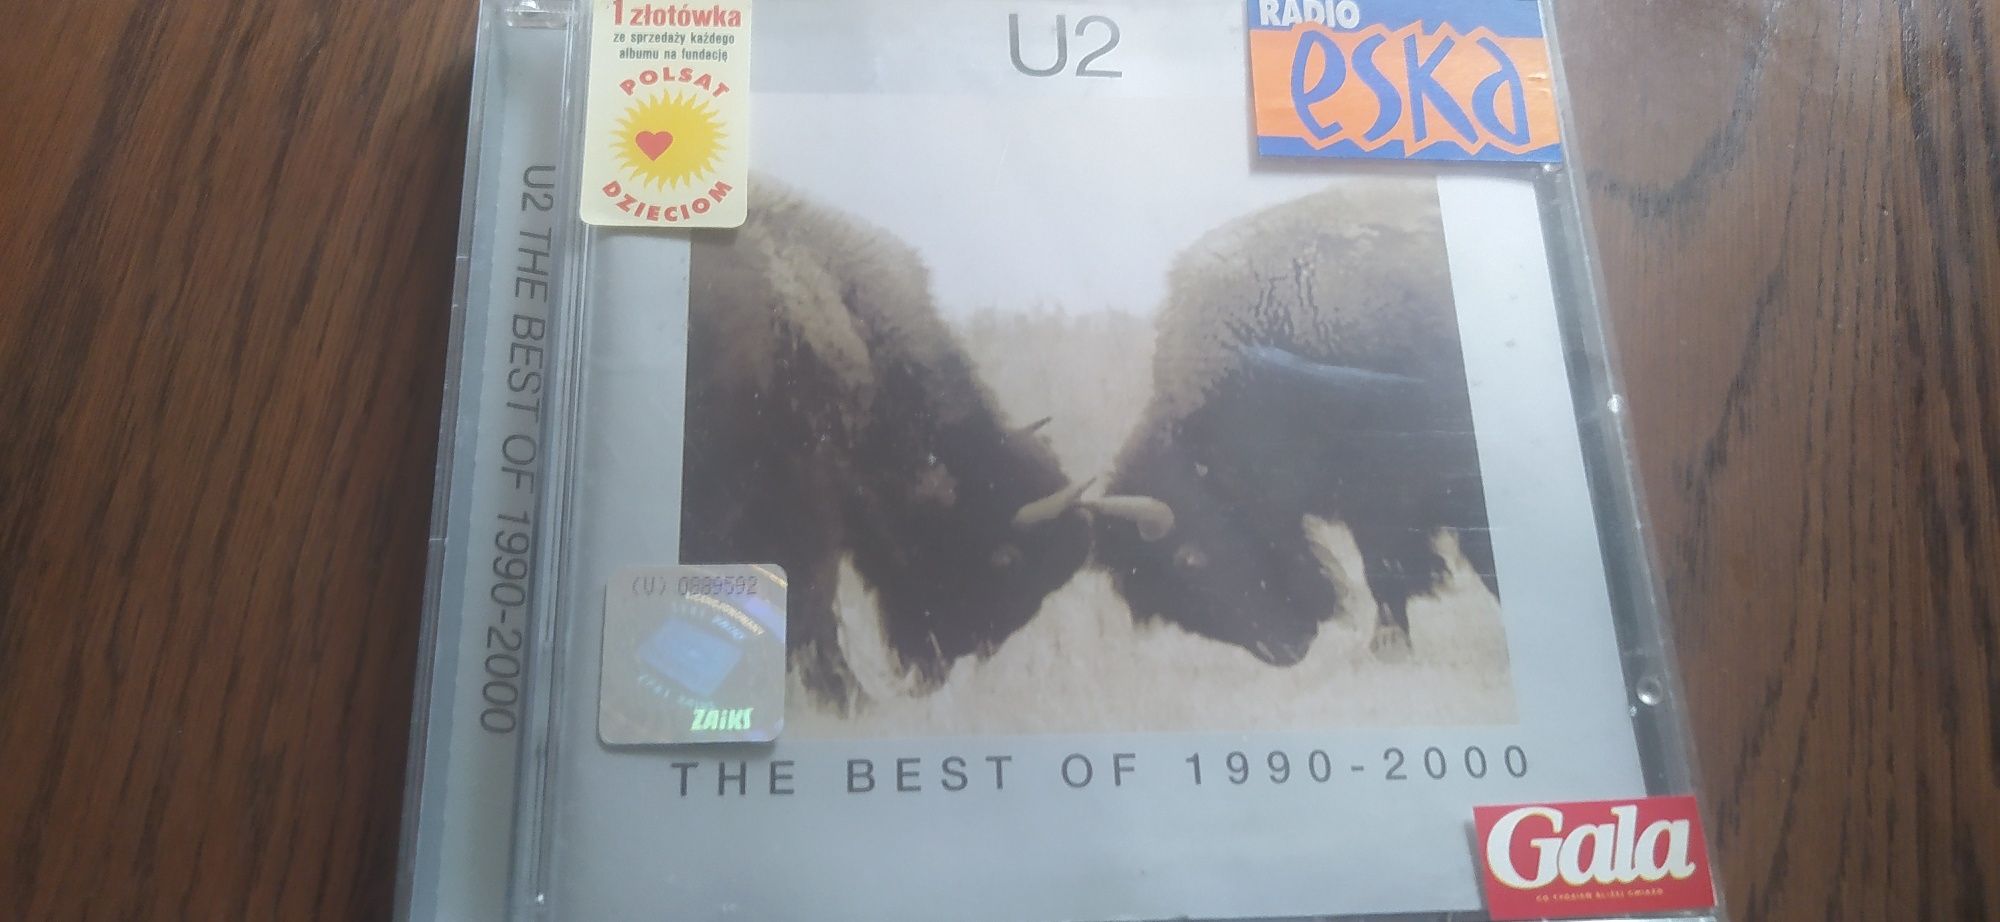 U2 the best of CD